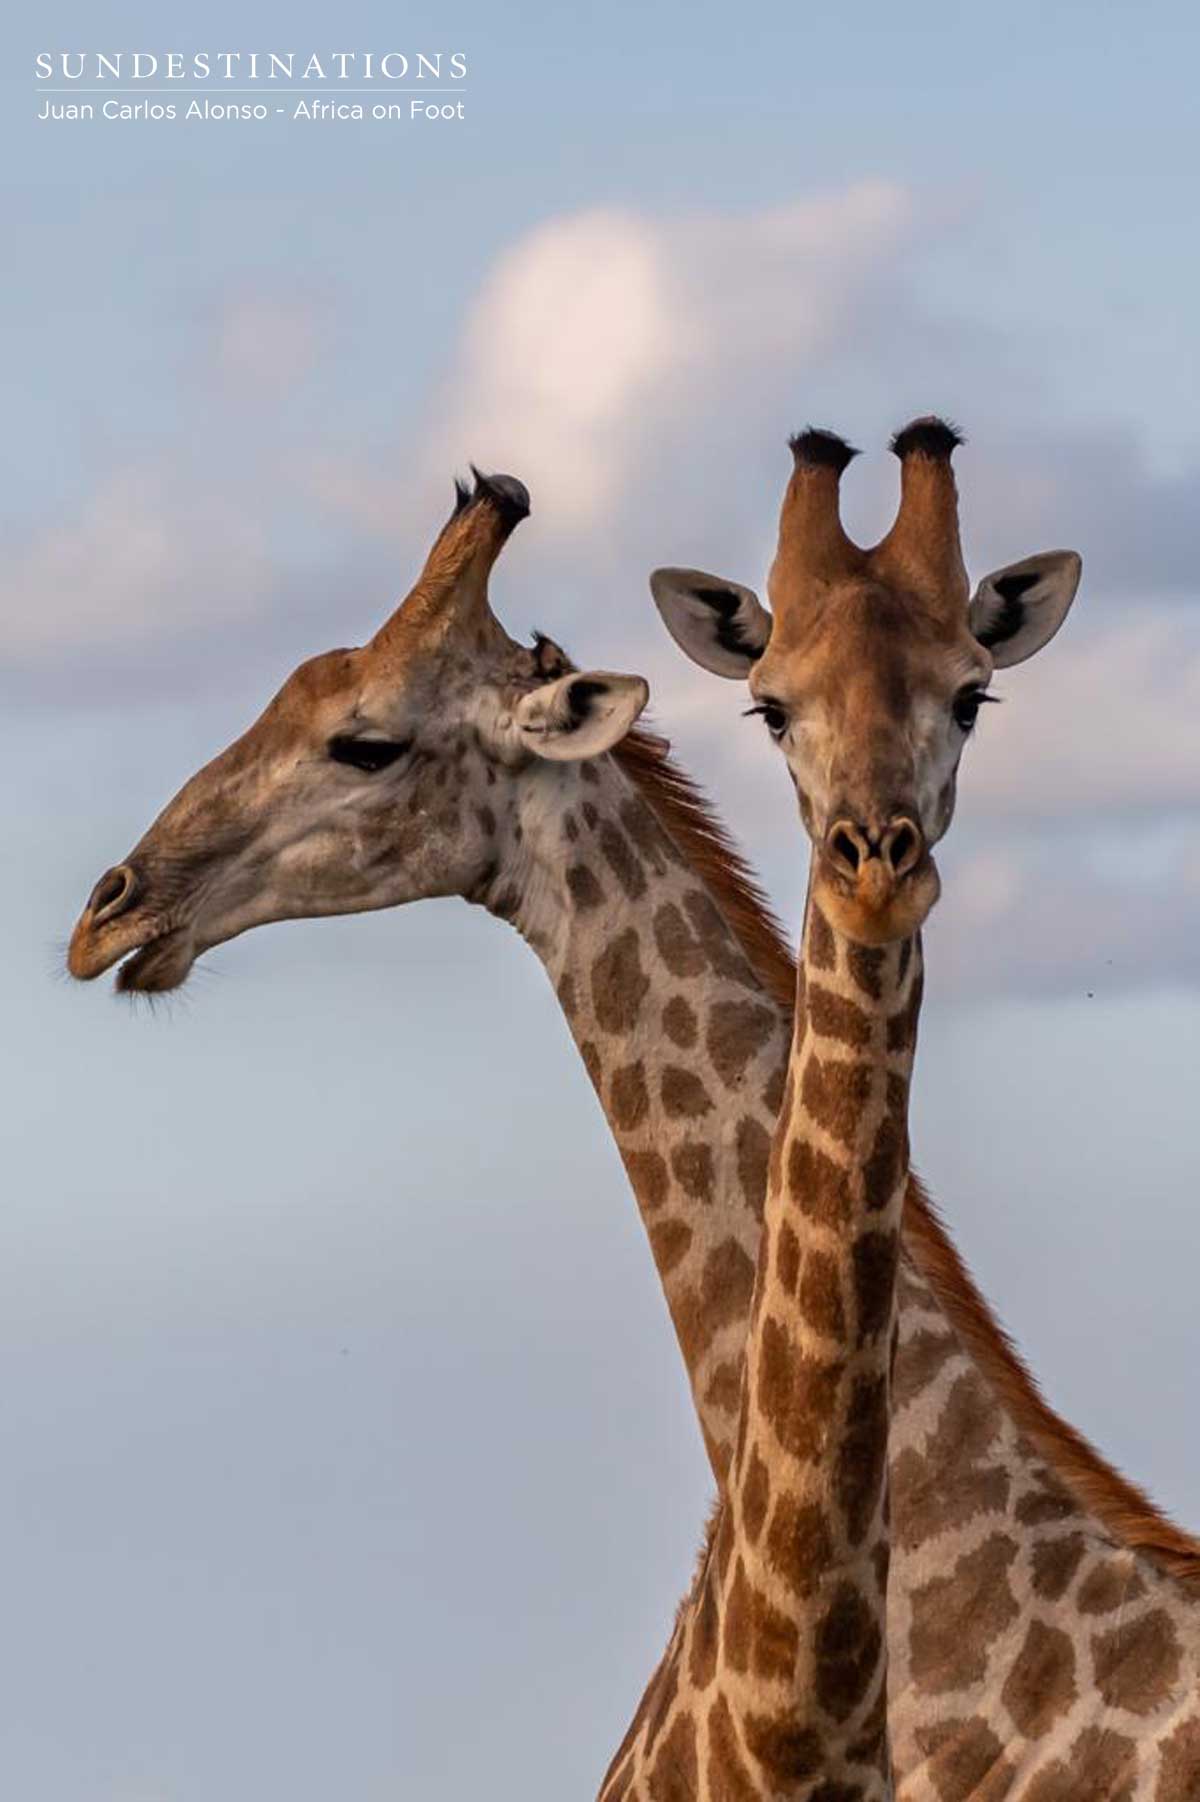 Giraffe at Africa on Foot